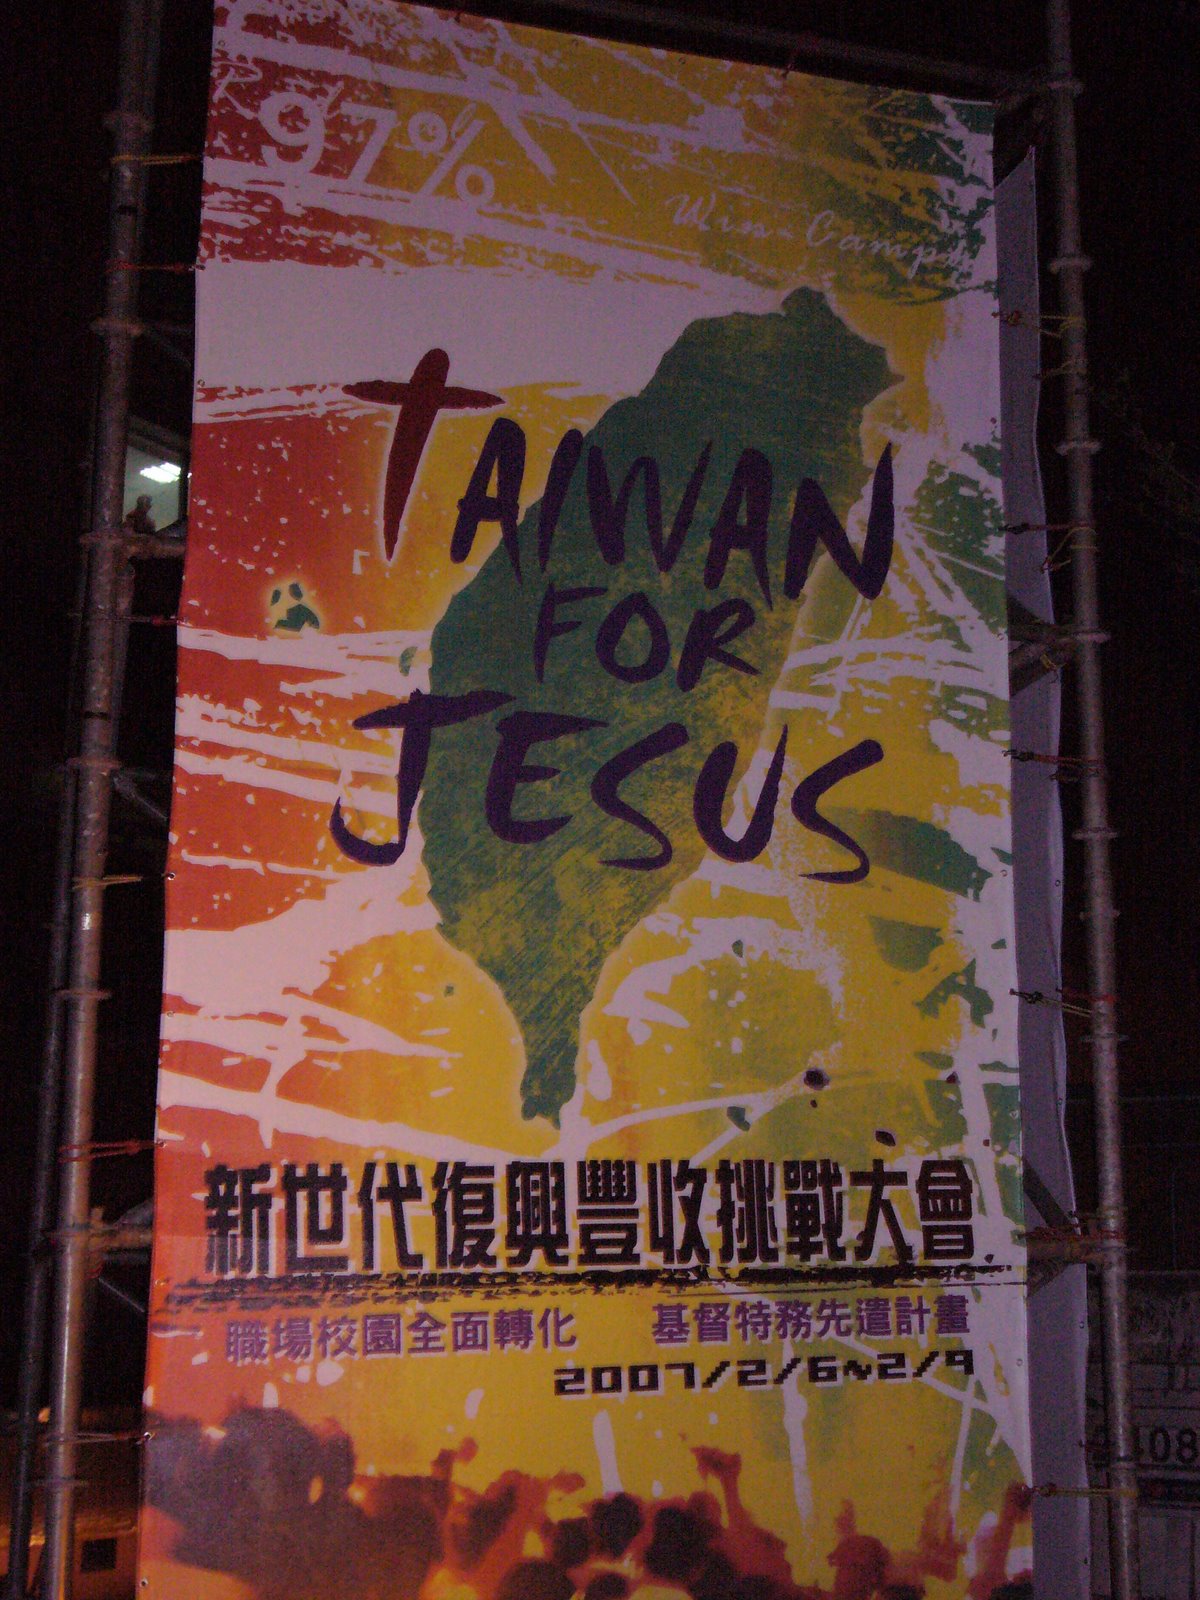 [Taiwan+for+Jesus+135.jpg]